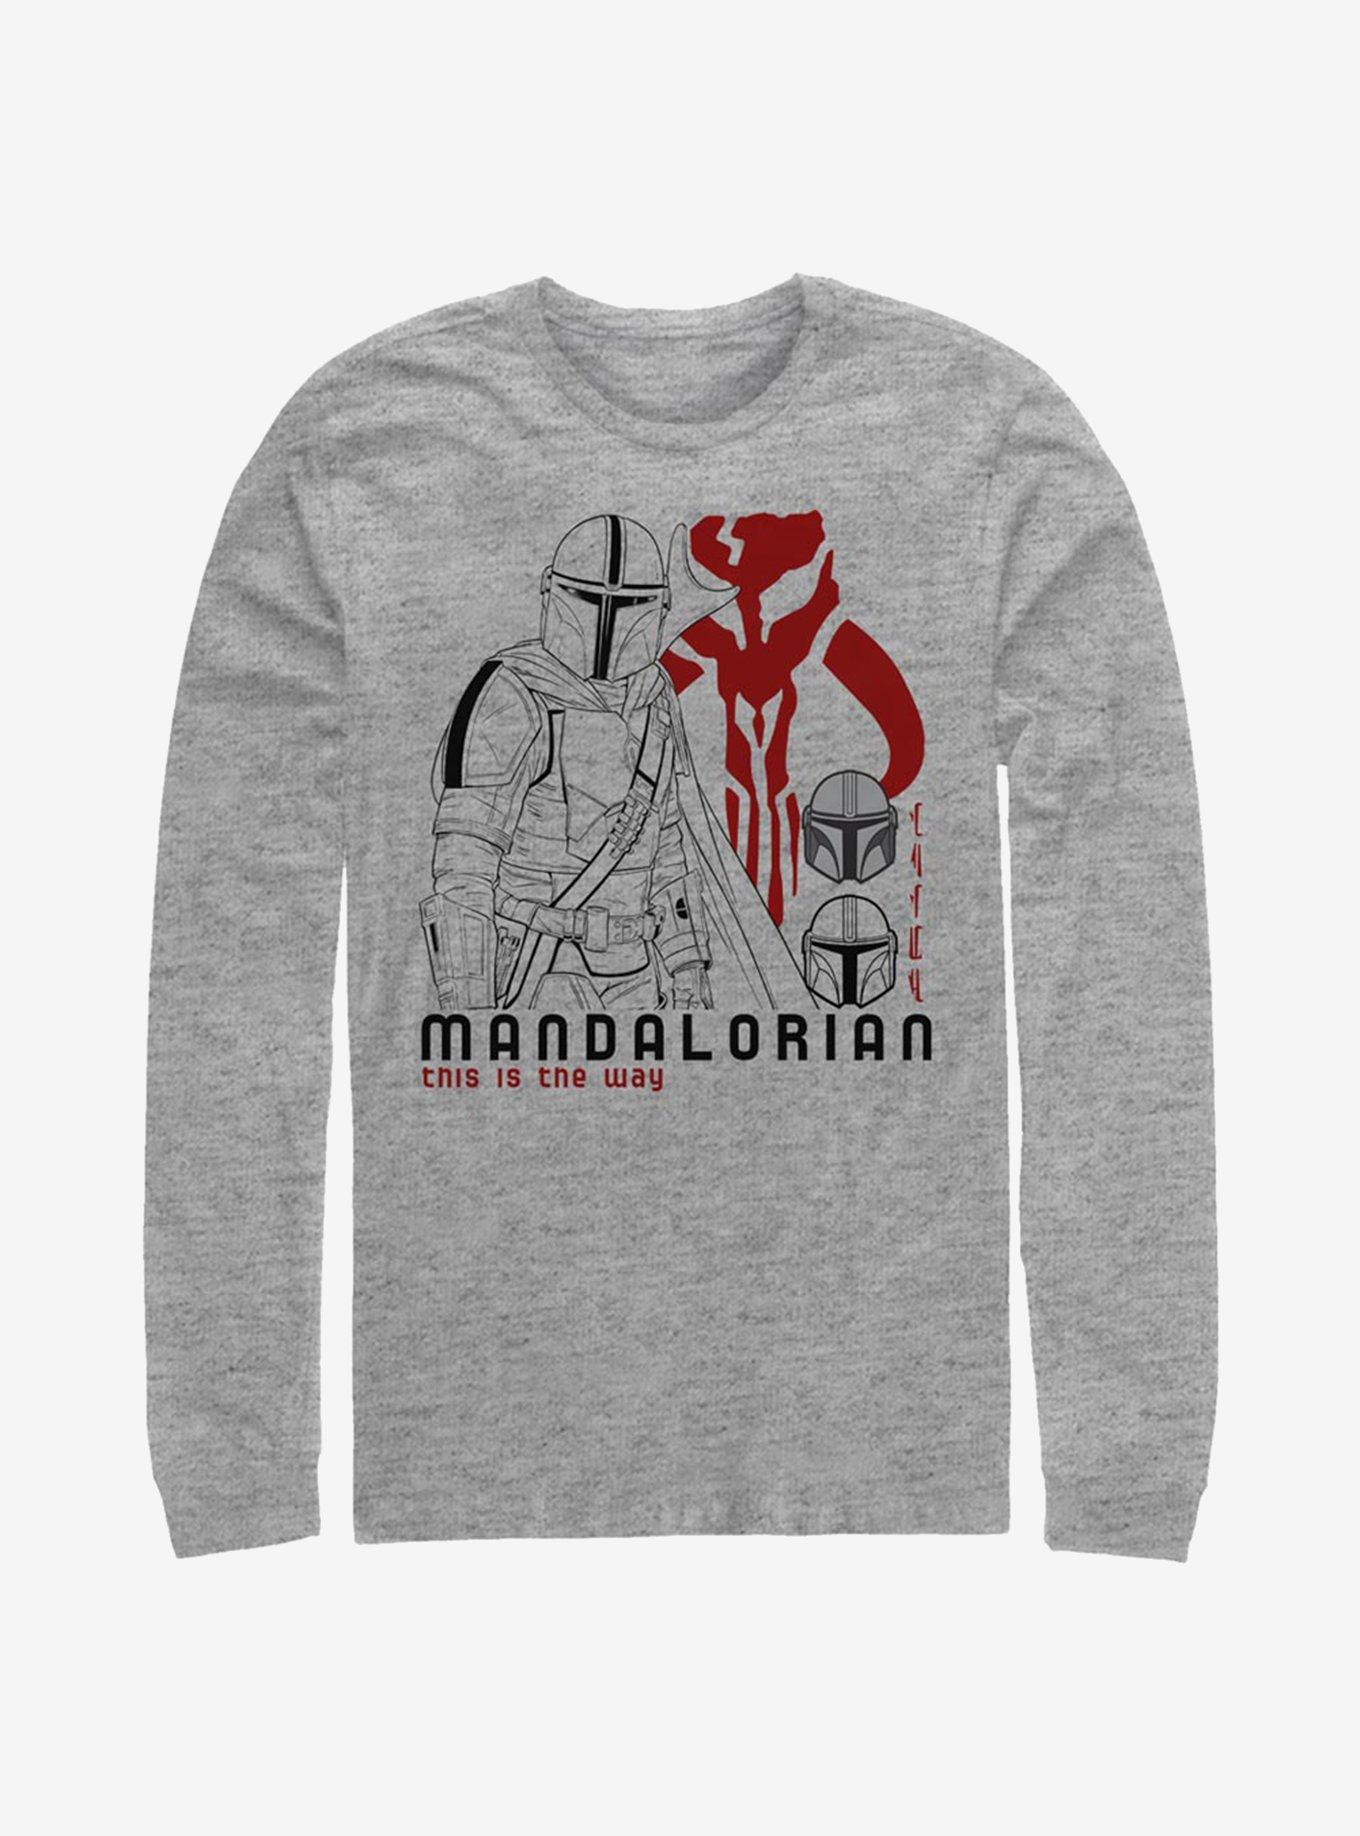 Star Wars The Mandalorian The Mando Way Long-Sleeve T-Shirt, ATH HTR, hi-res